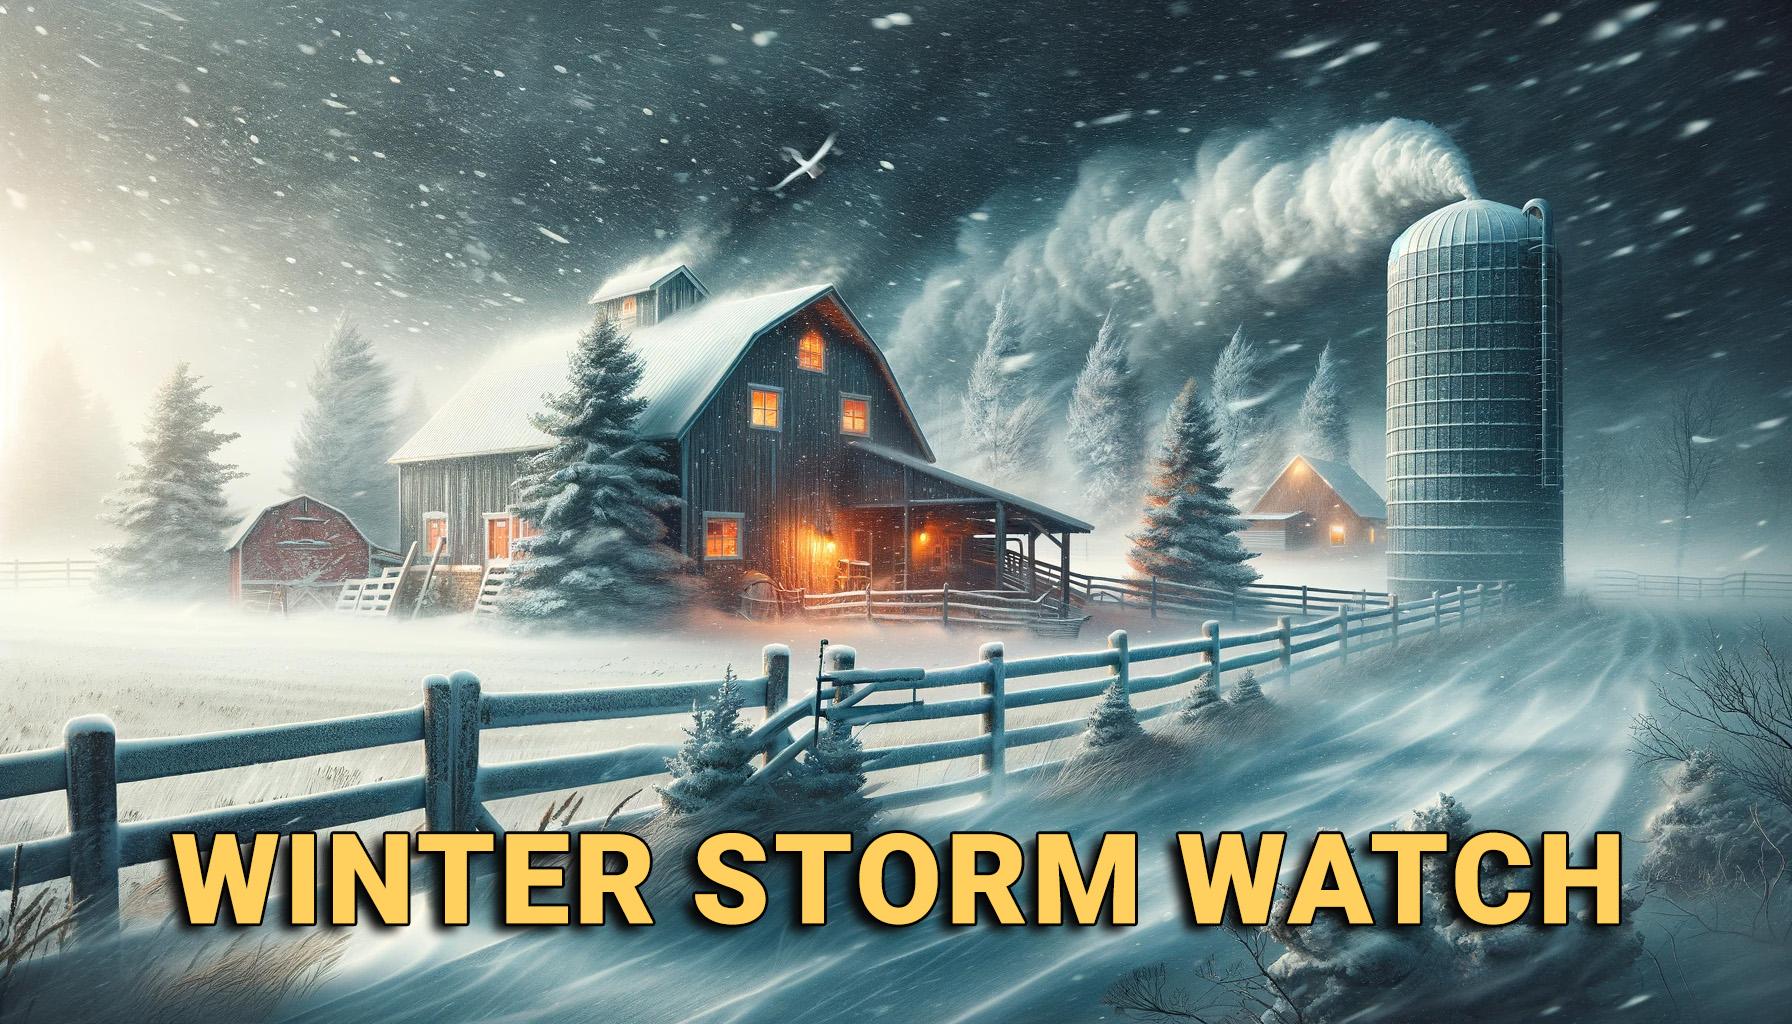 Winter Storm Watch News Graphic